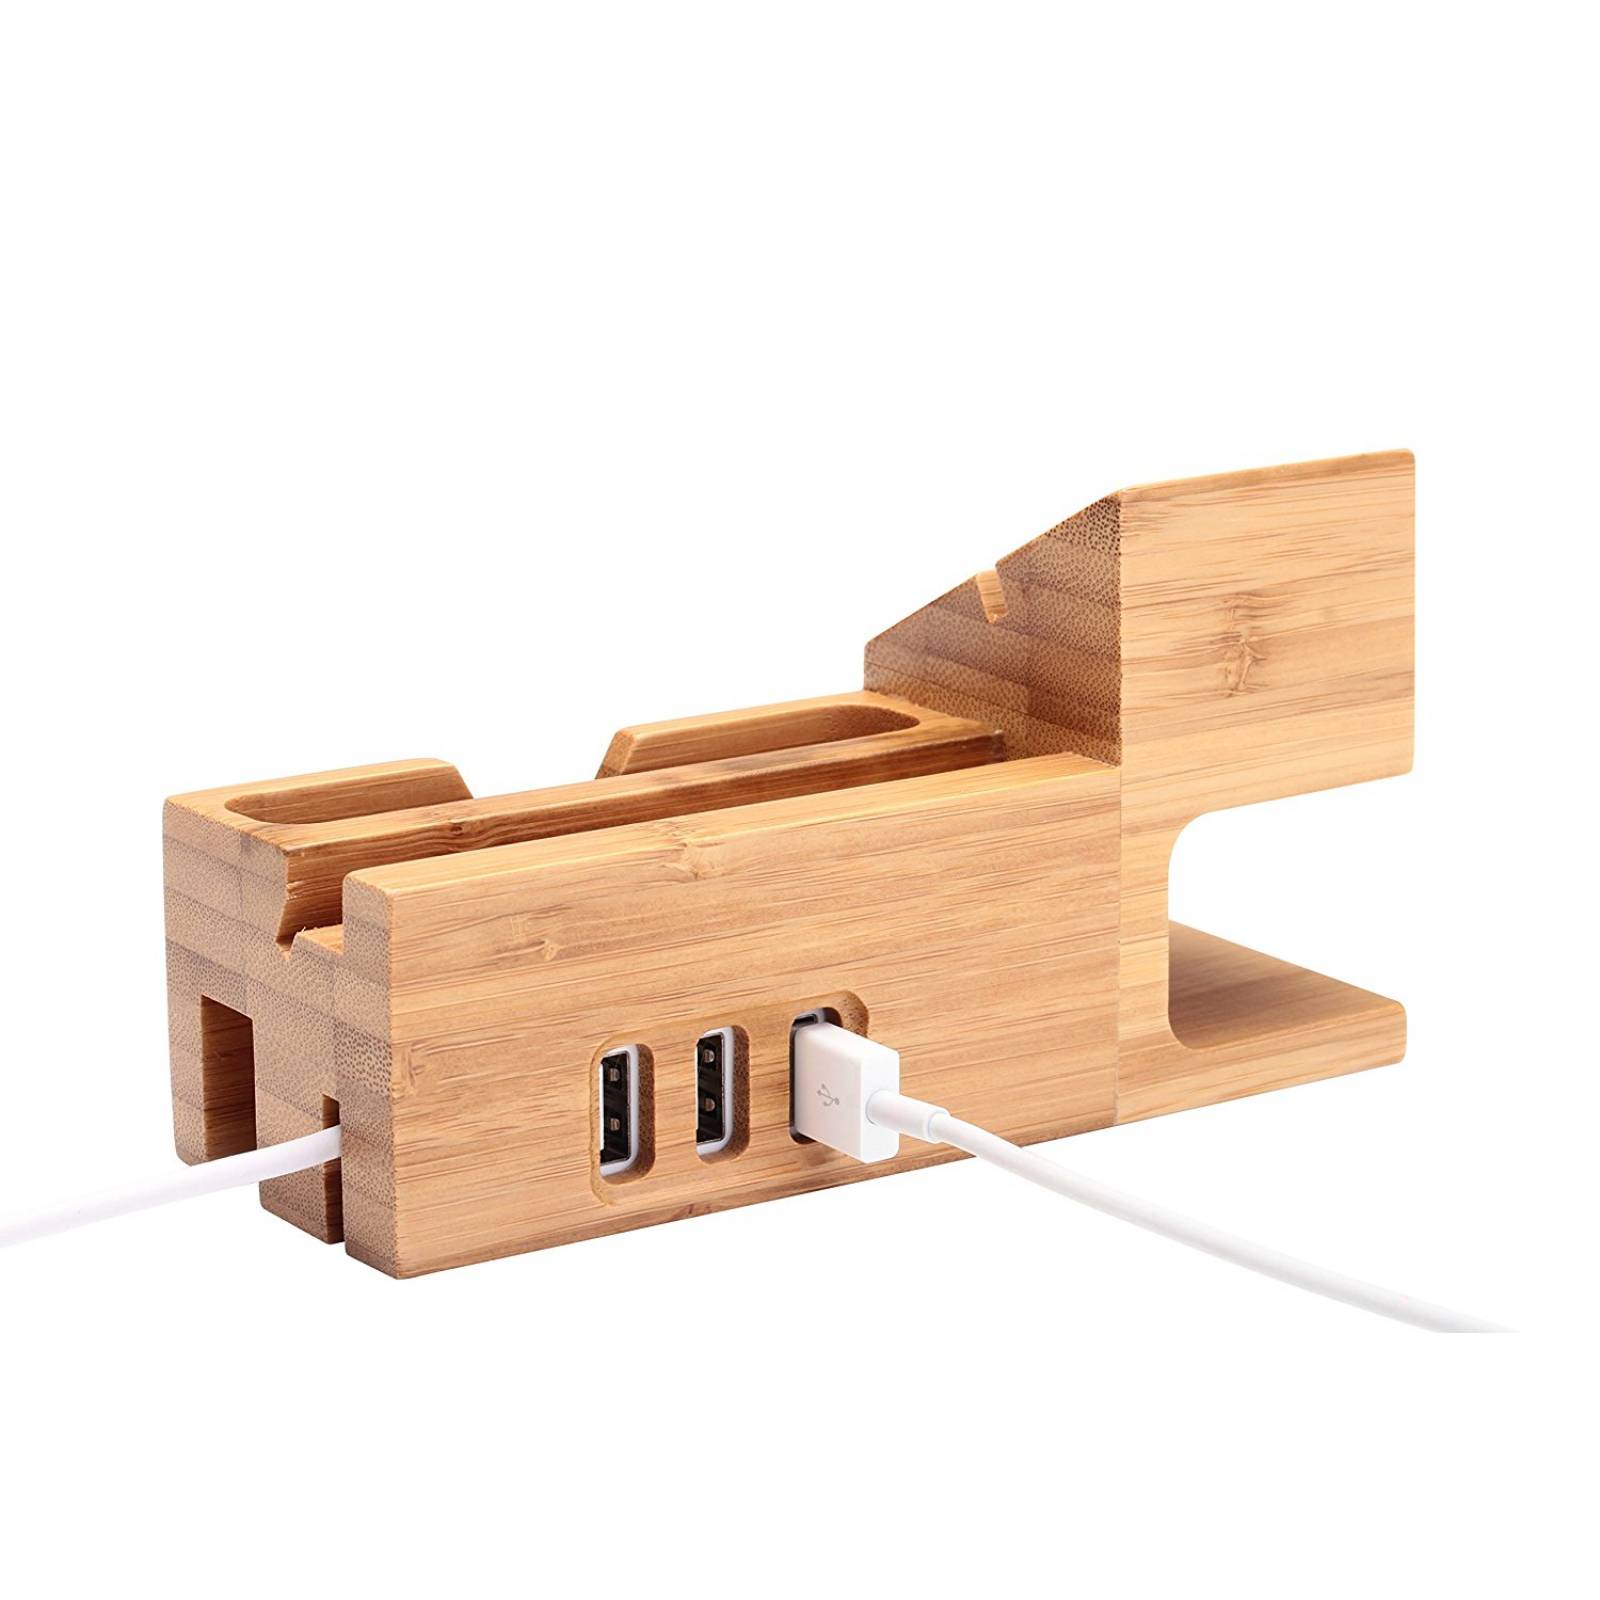 Ofeely bambú madera soporte carga 3 puertos USB Apple Watch